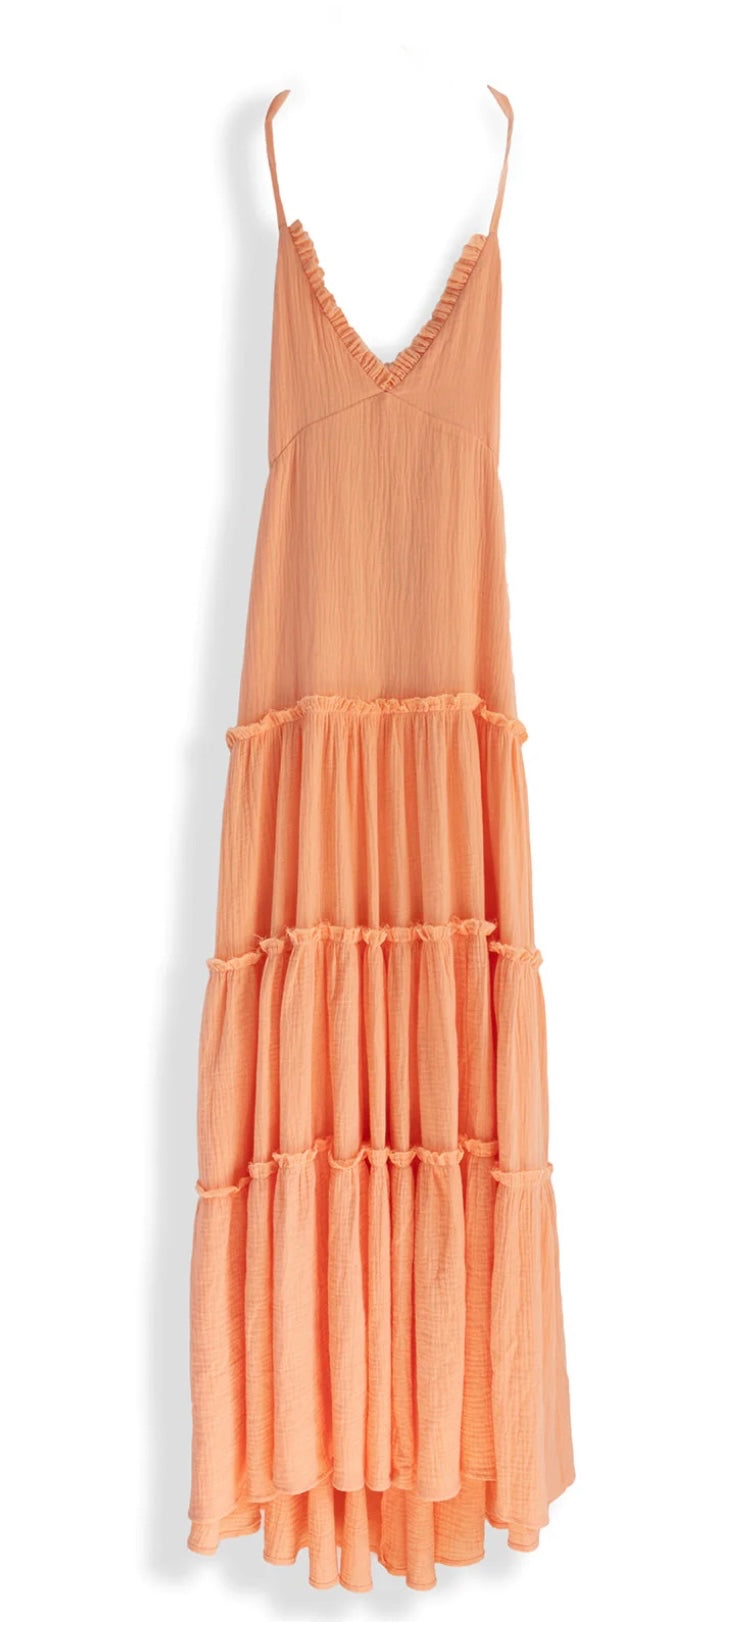 Just Peachy Ruffle Gauze Cotton Maxi Dress